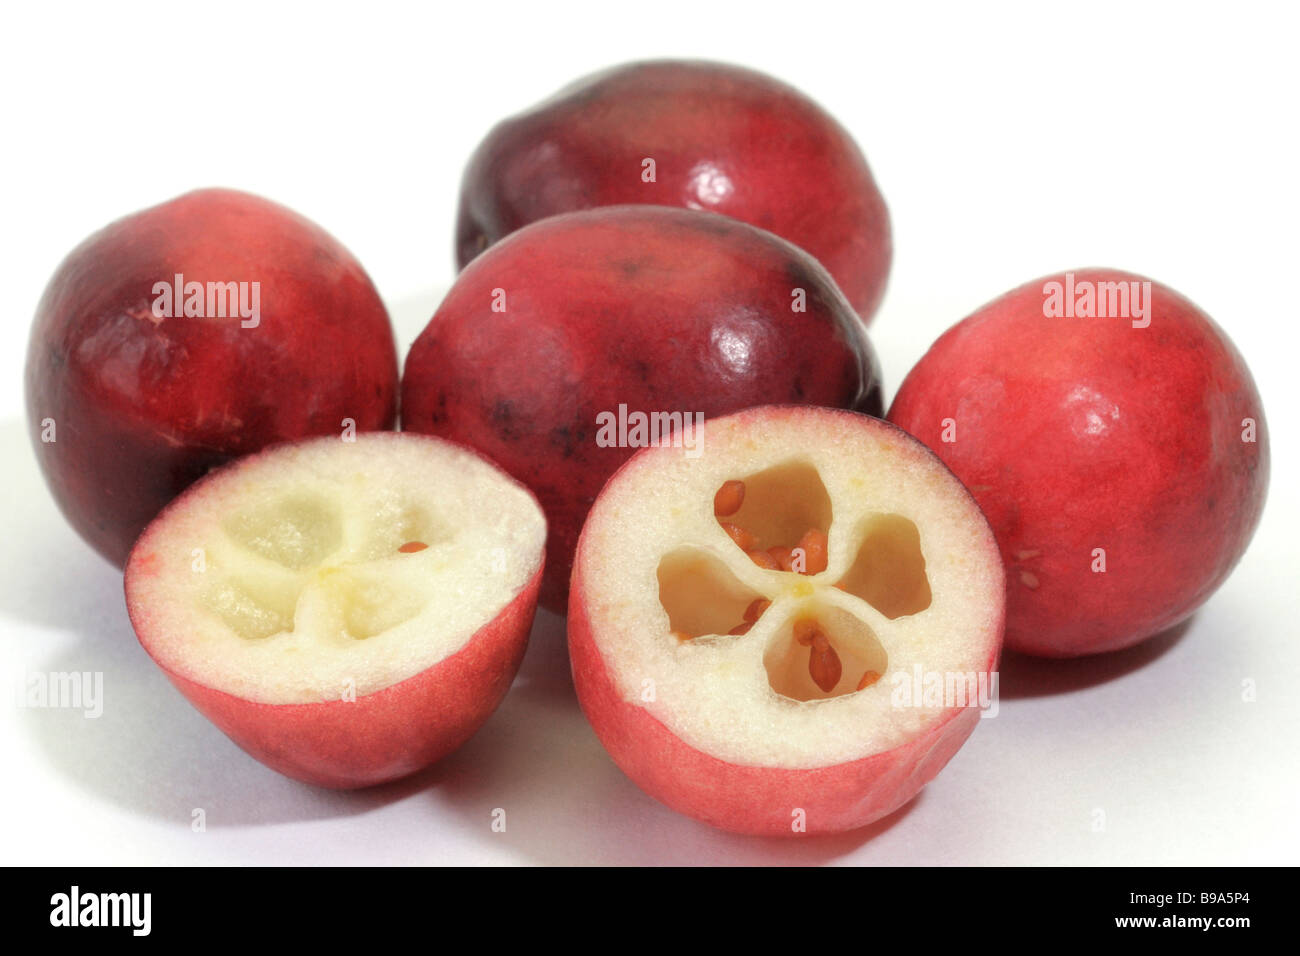 American Cranberry (Vaccinium macrocarpon, Oxycoccus macrocarpus), whole and halved berries, studio picture Stock Photo